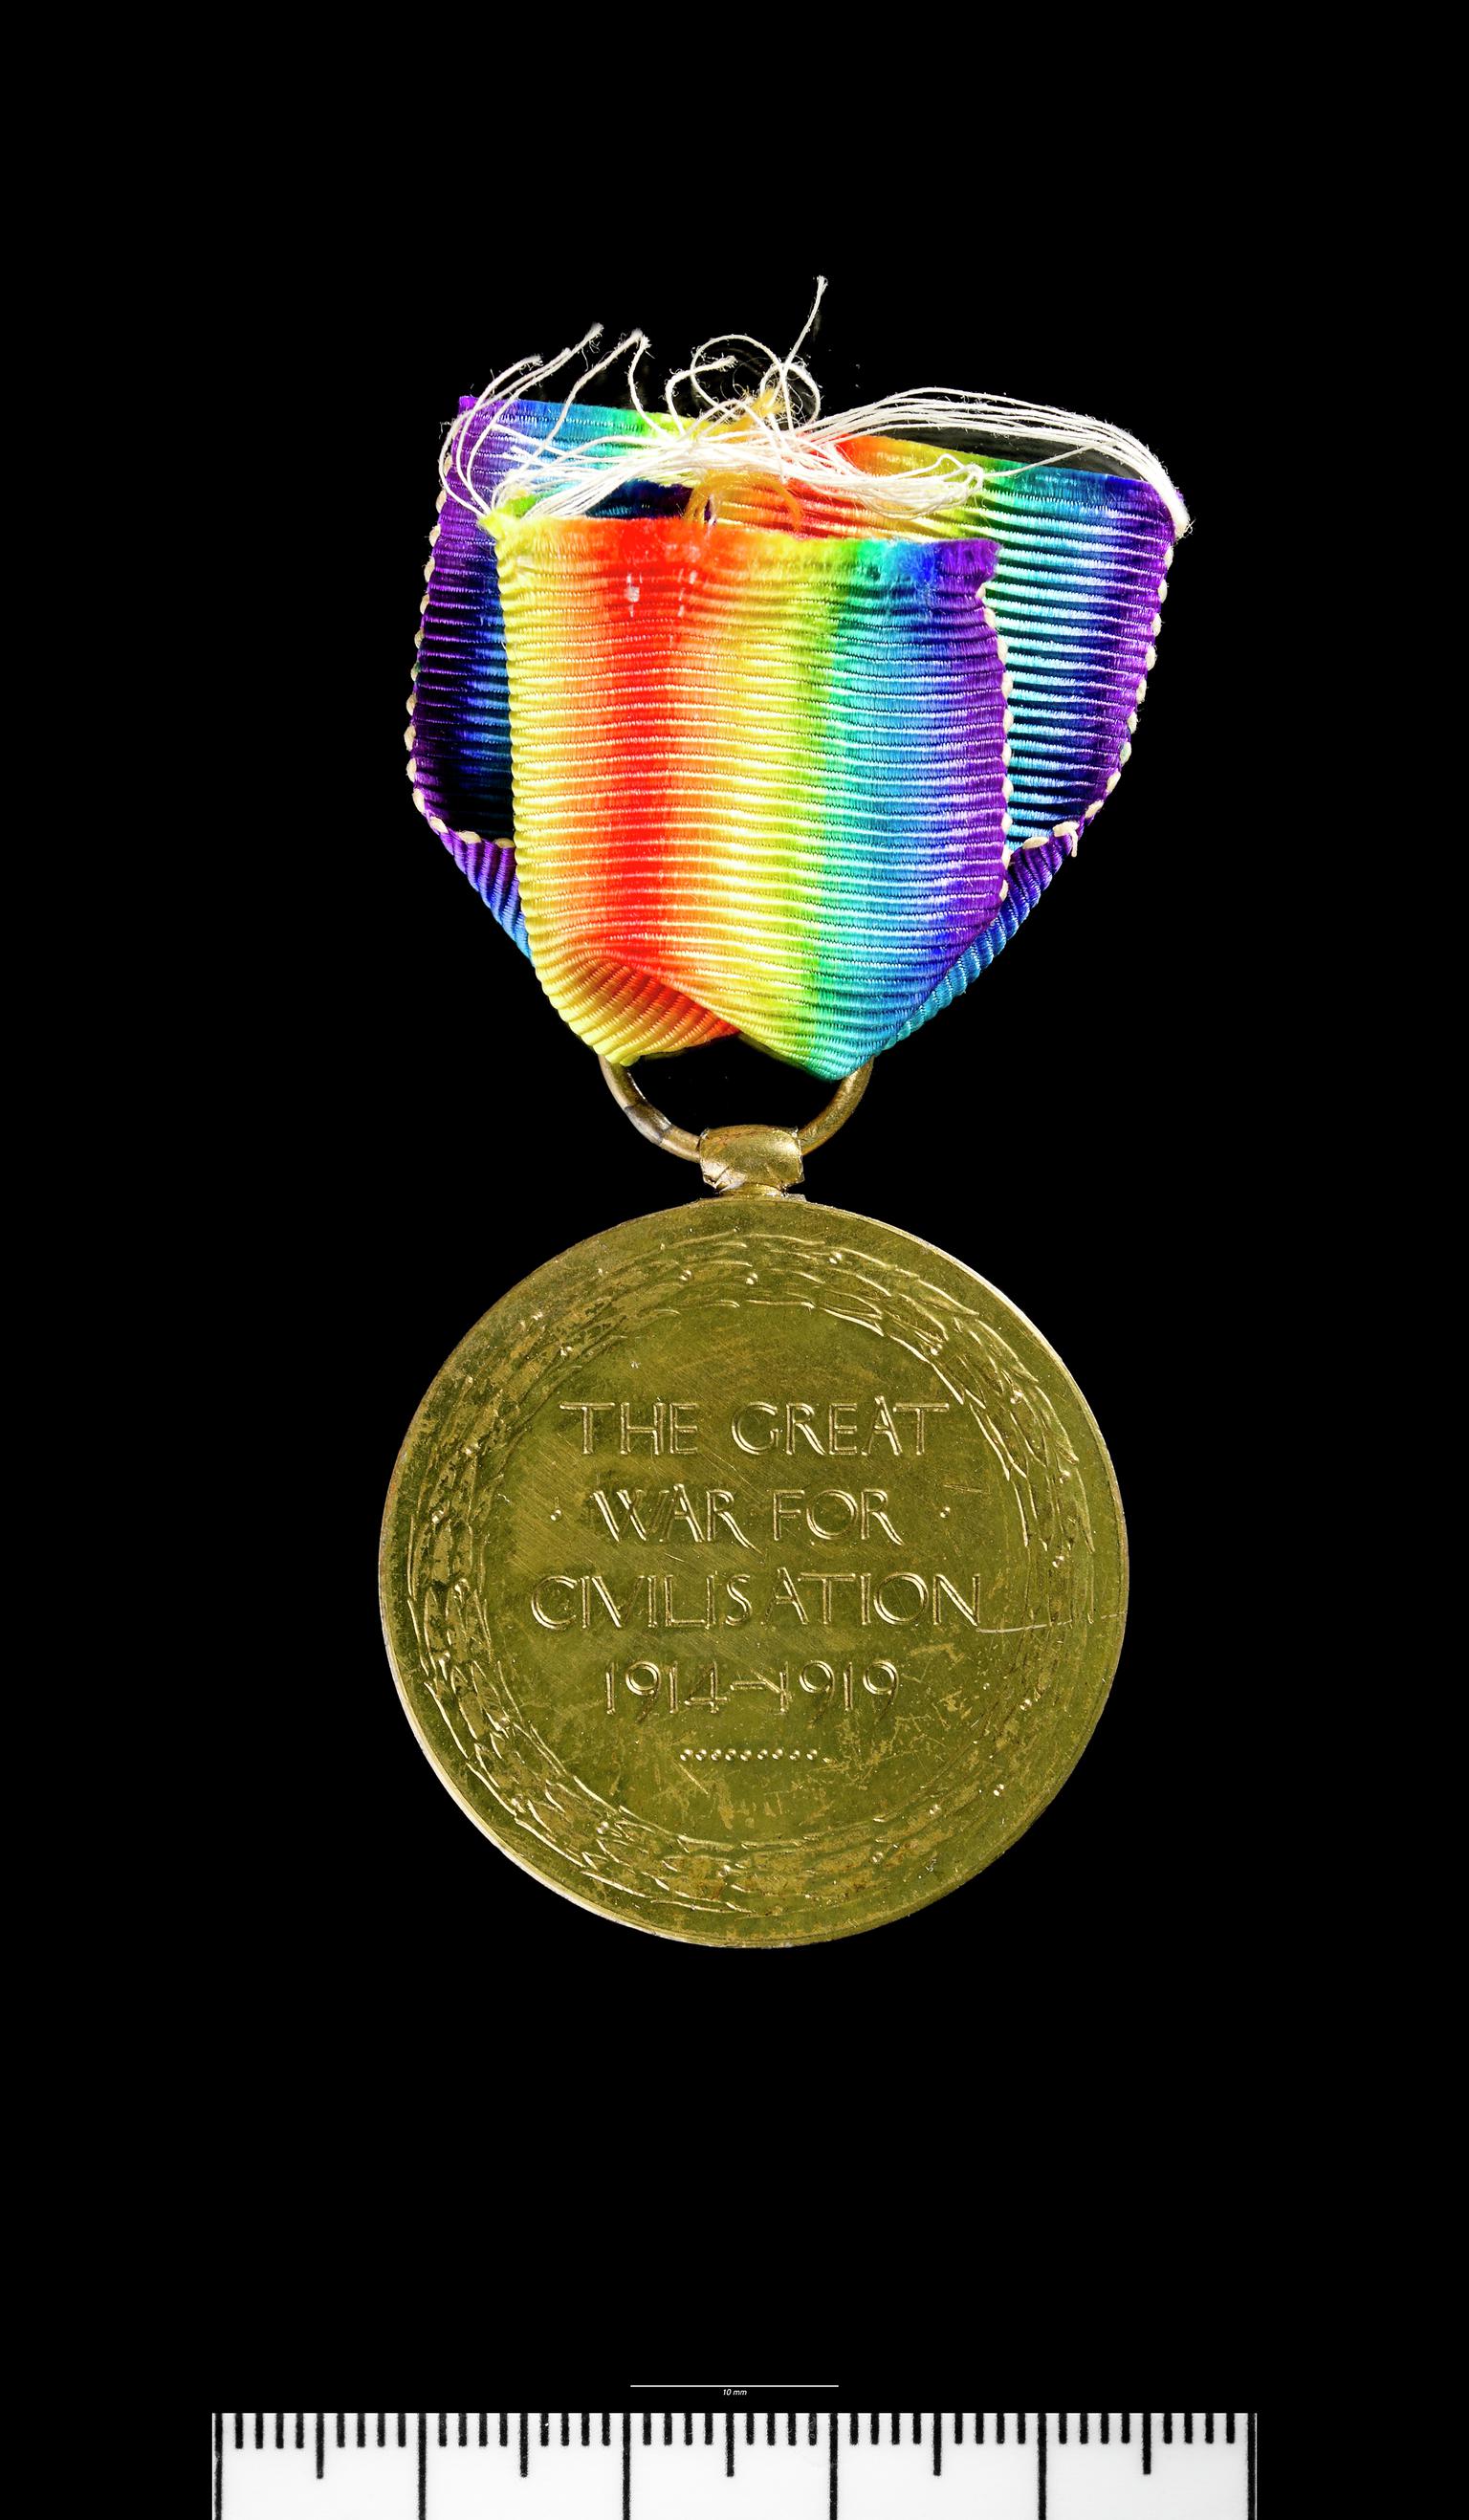 Victory Medal, 1914-19